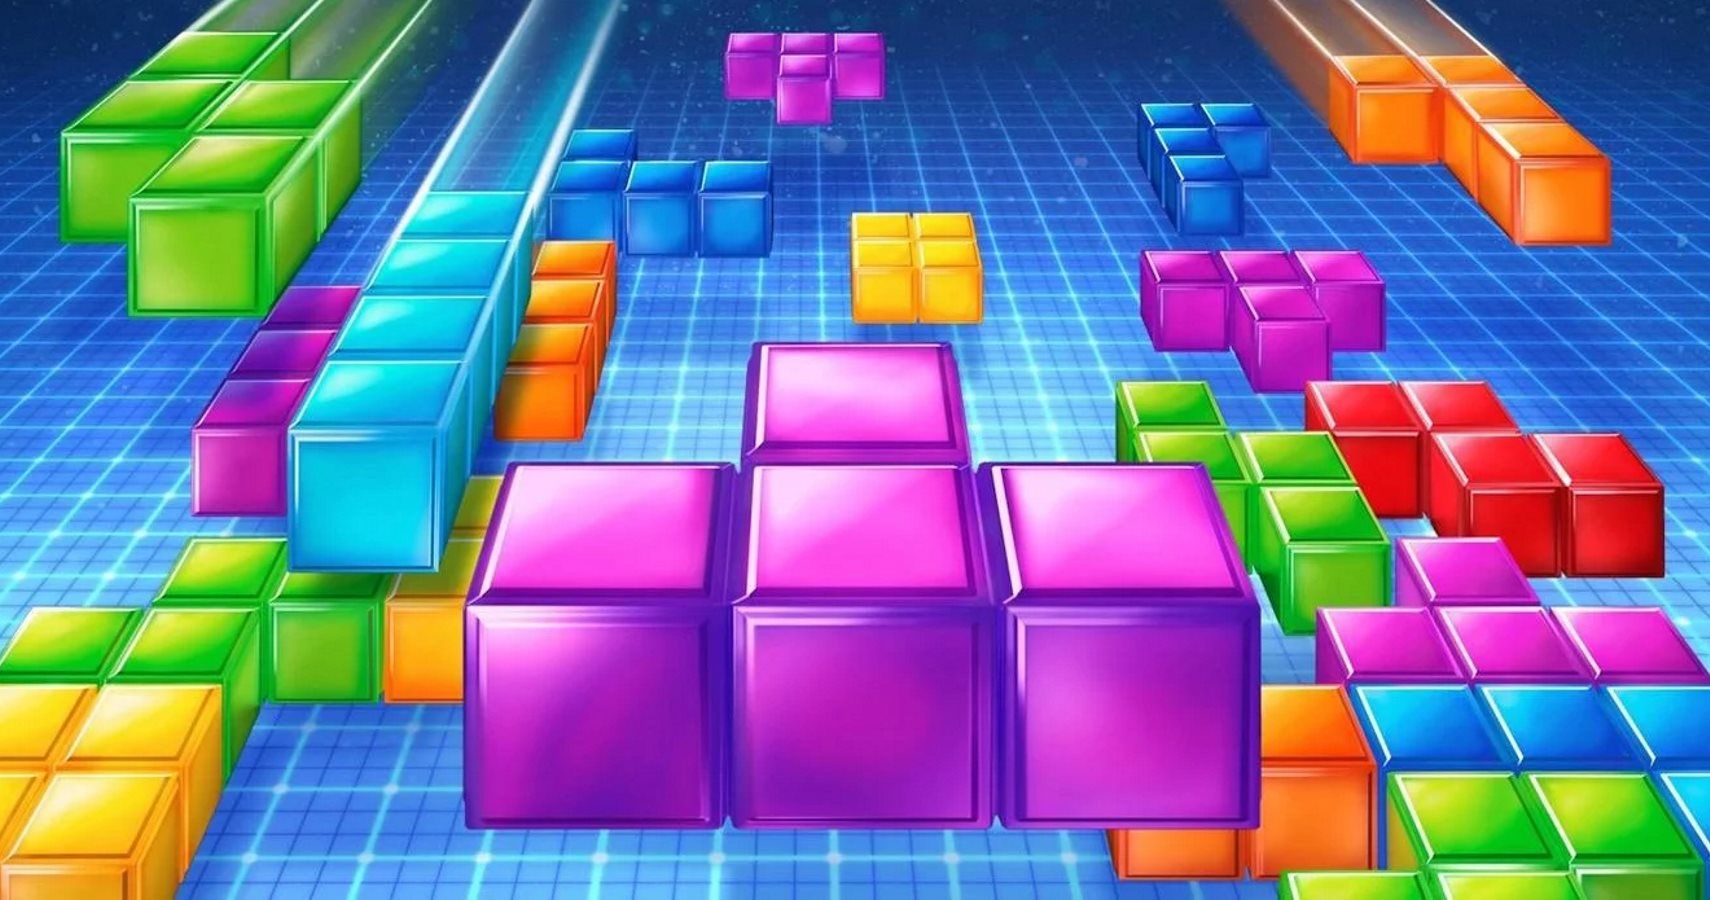 This Weekend: Nintendo Announces Tetris 99 Maximus Cup Online Tournament